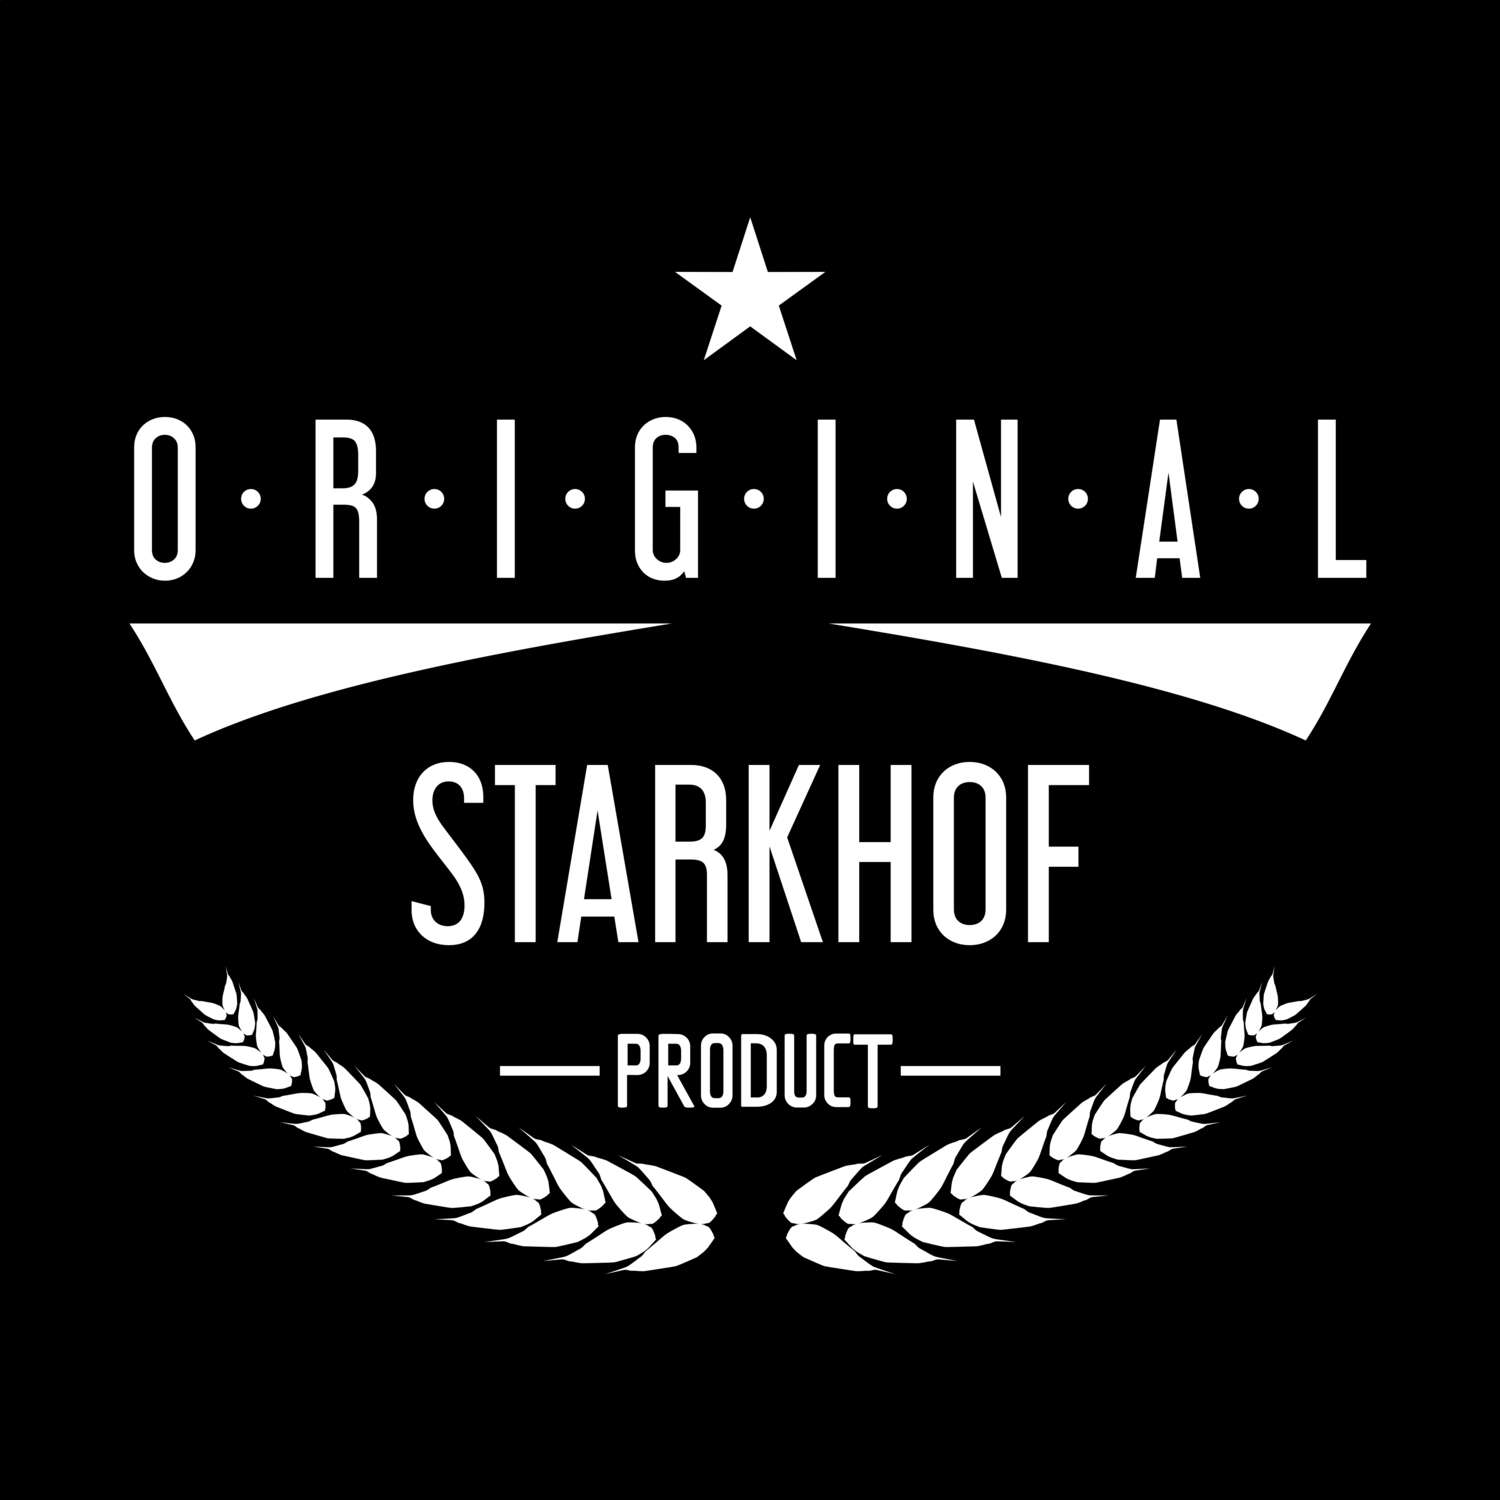 Starkhof T-Shirt »Original Product«